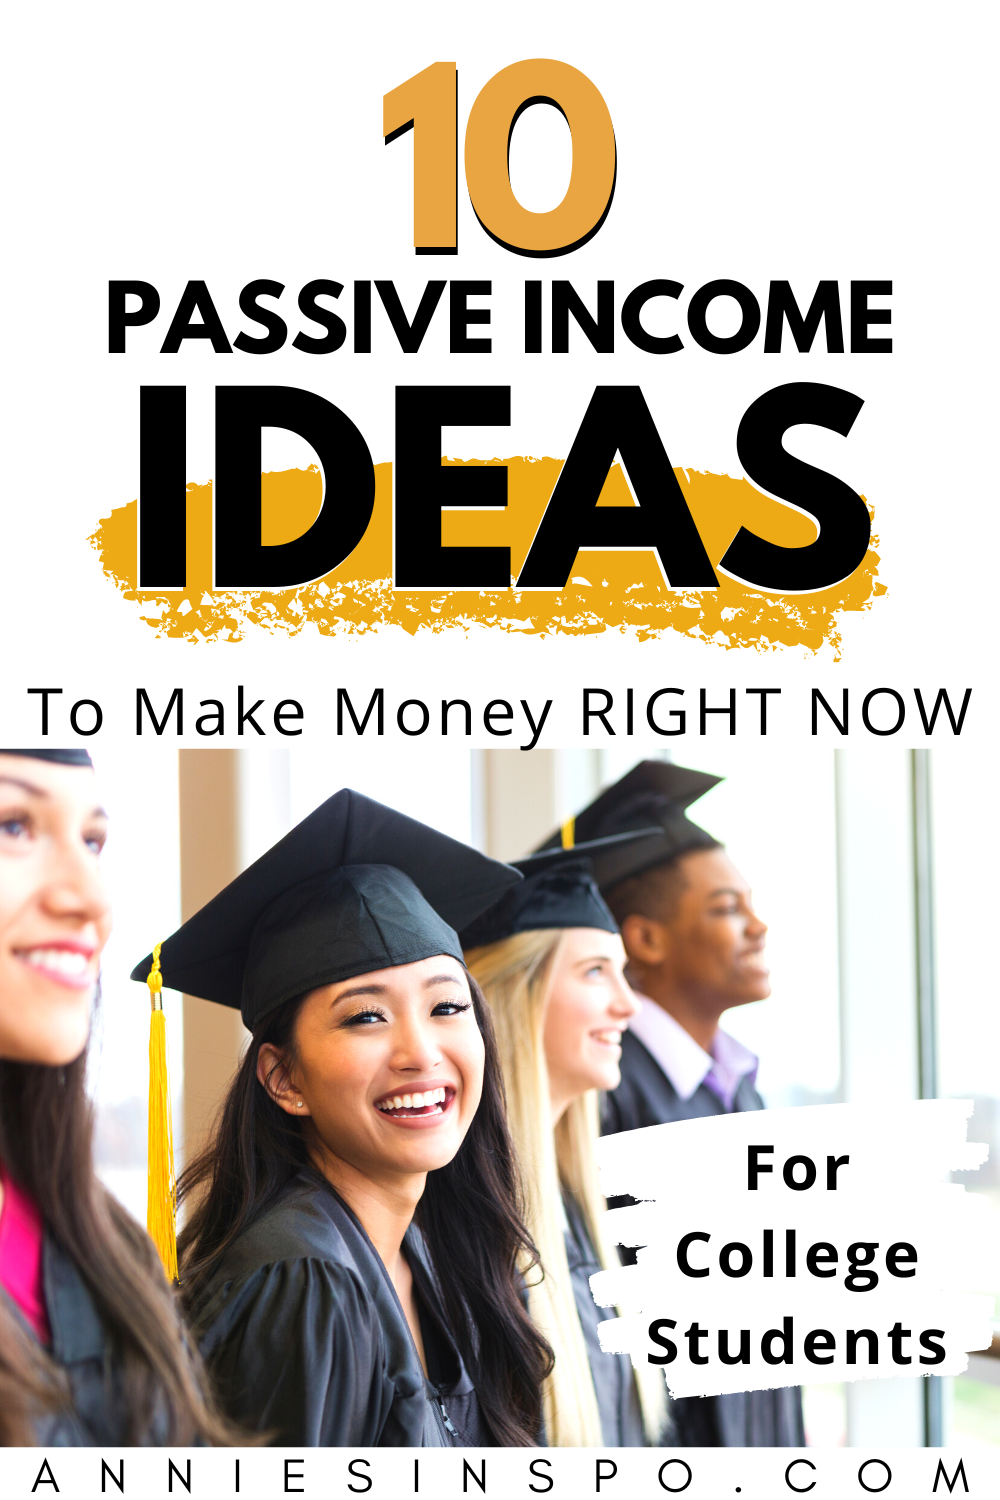 Passive income Ideas for college students